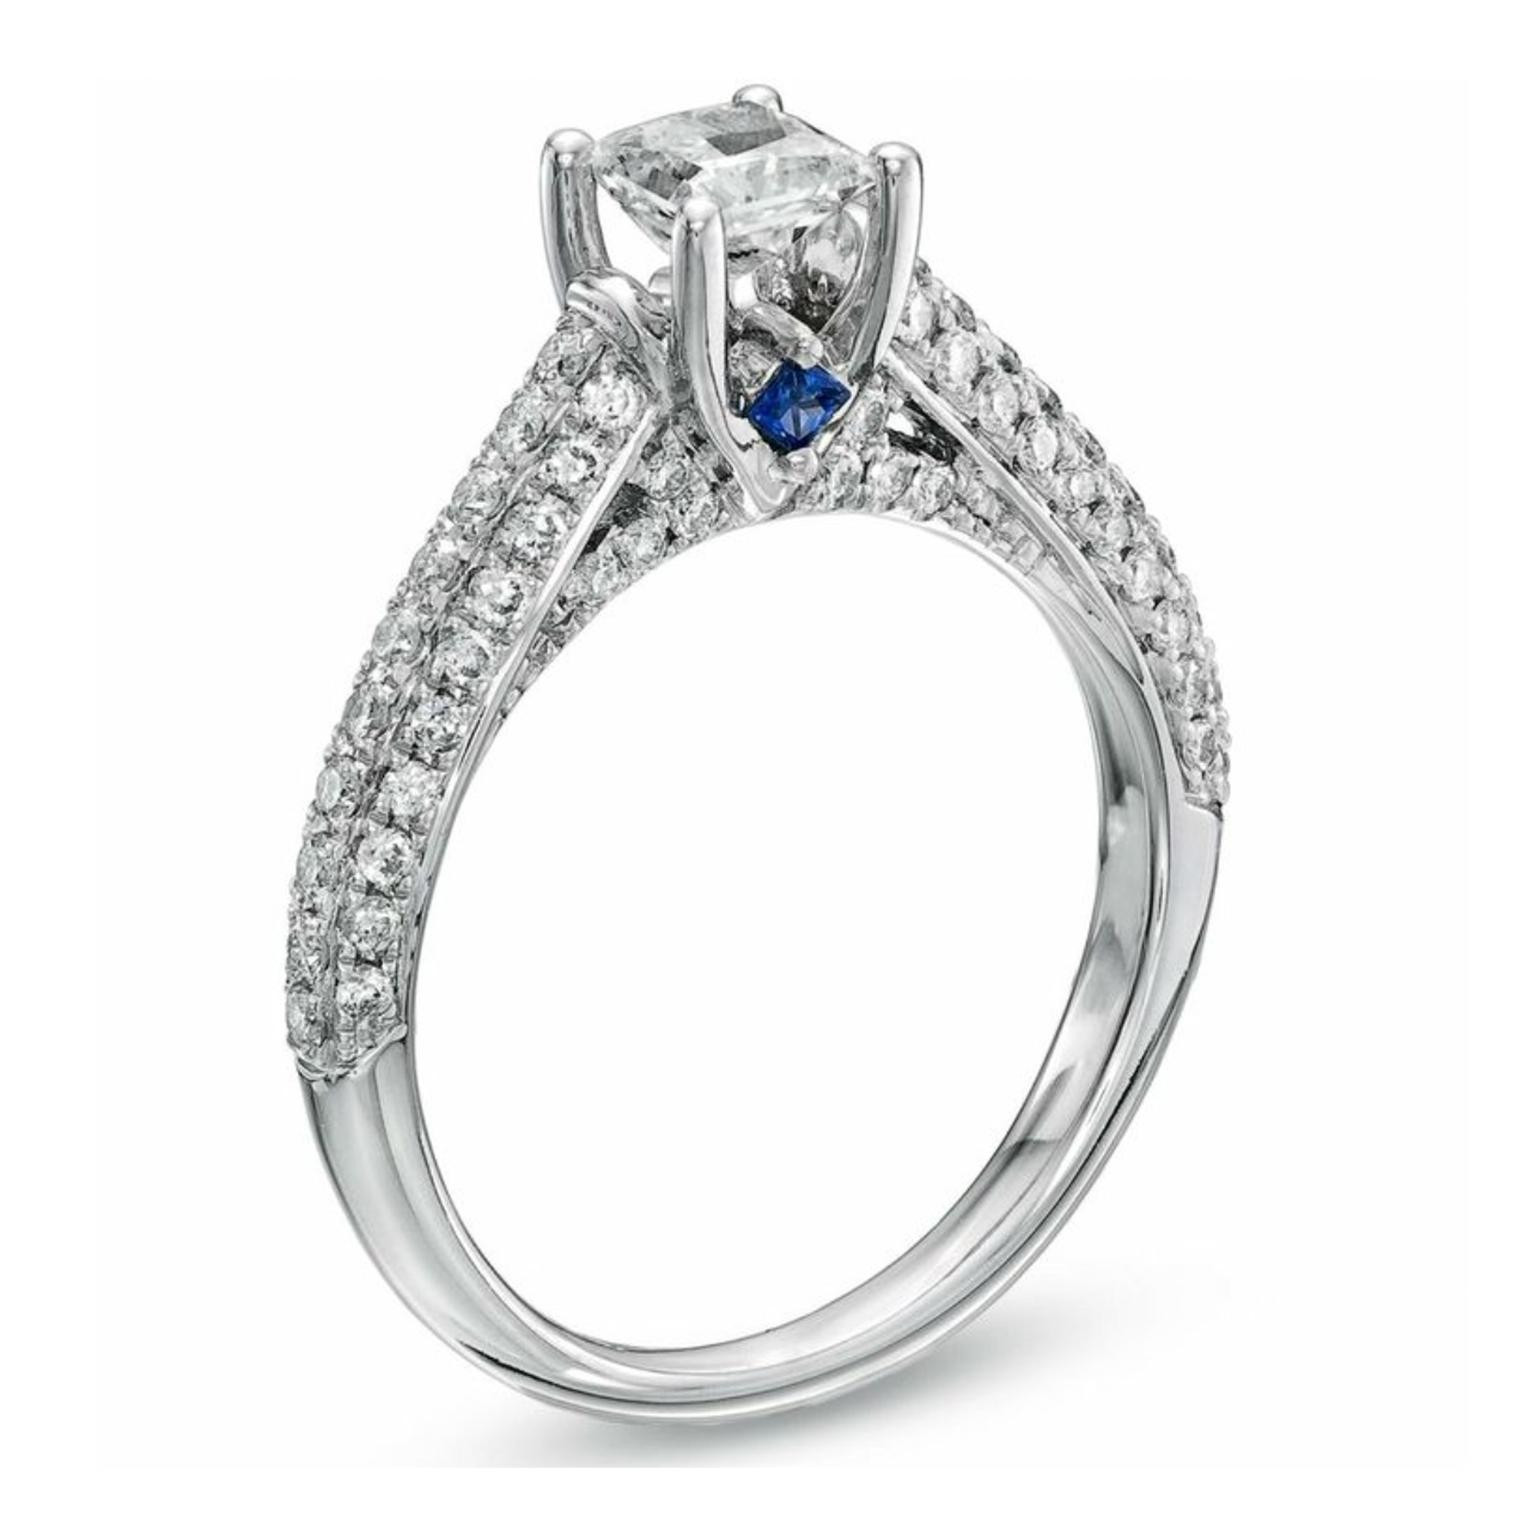 Vera Wang Wedding Ring
 LOVE princess cut diamond engagement ring